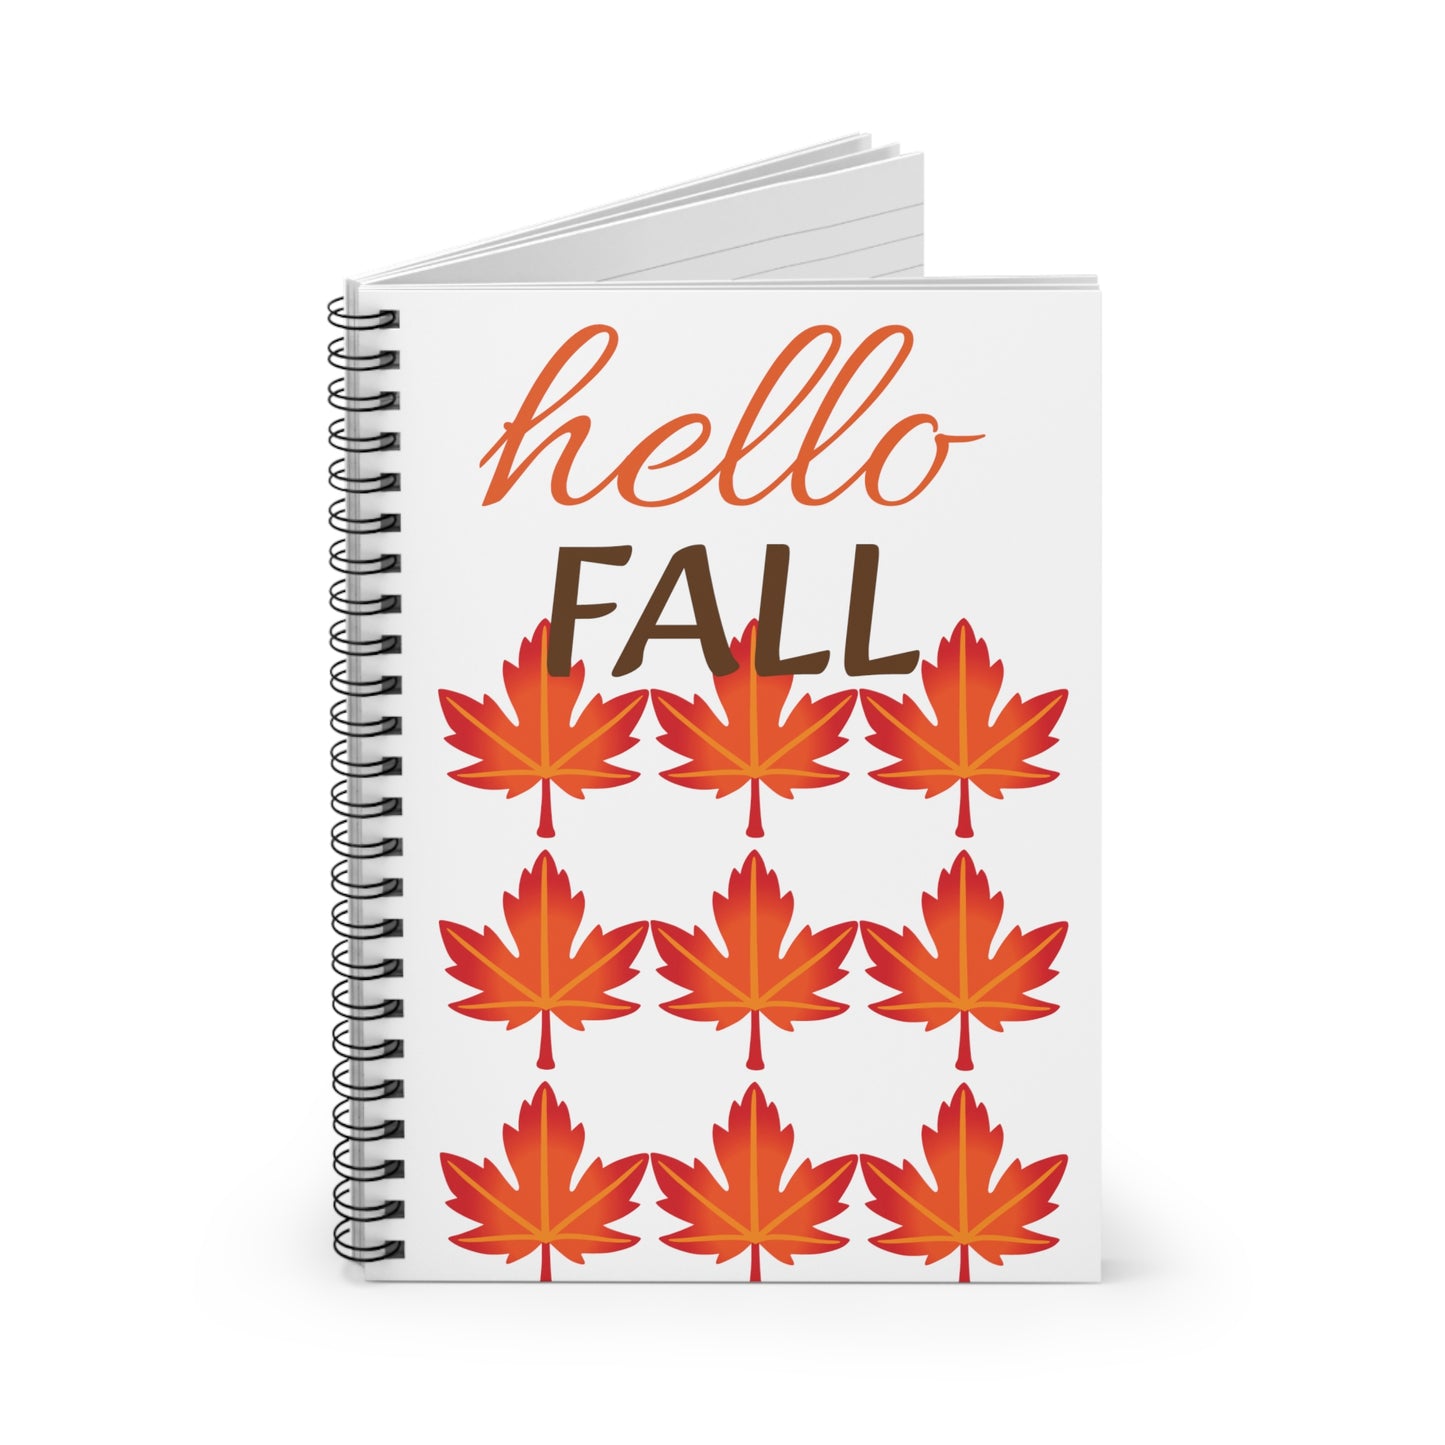 Spiral Notebook, Hello Fall Journal, Ruled Line Self Reflection Jotter